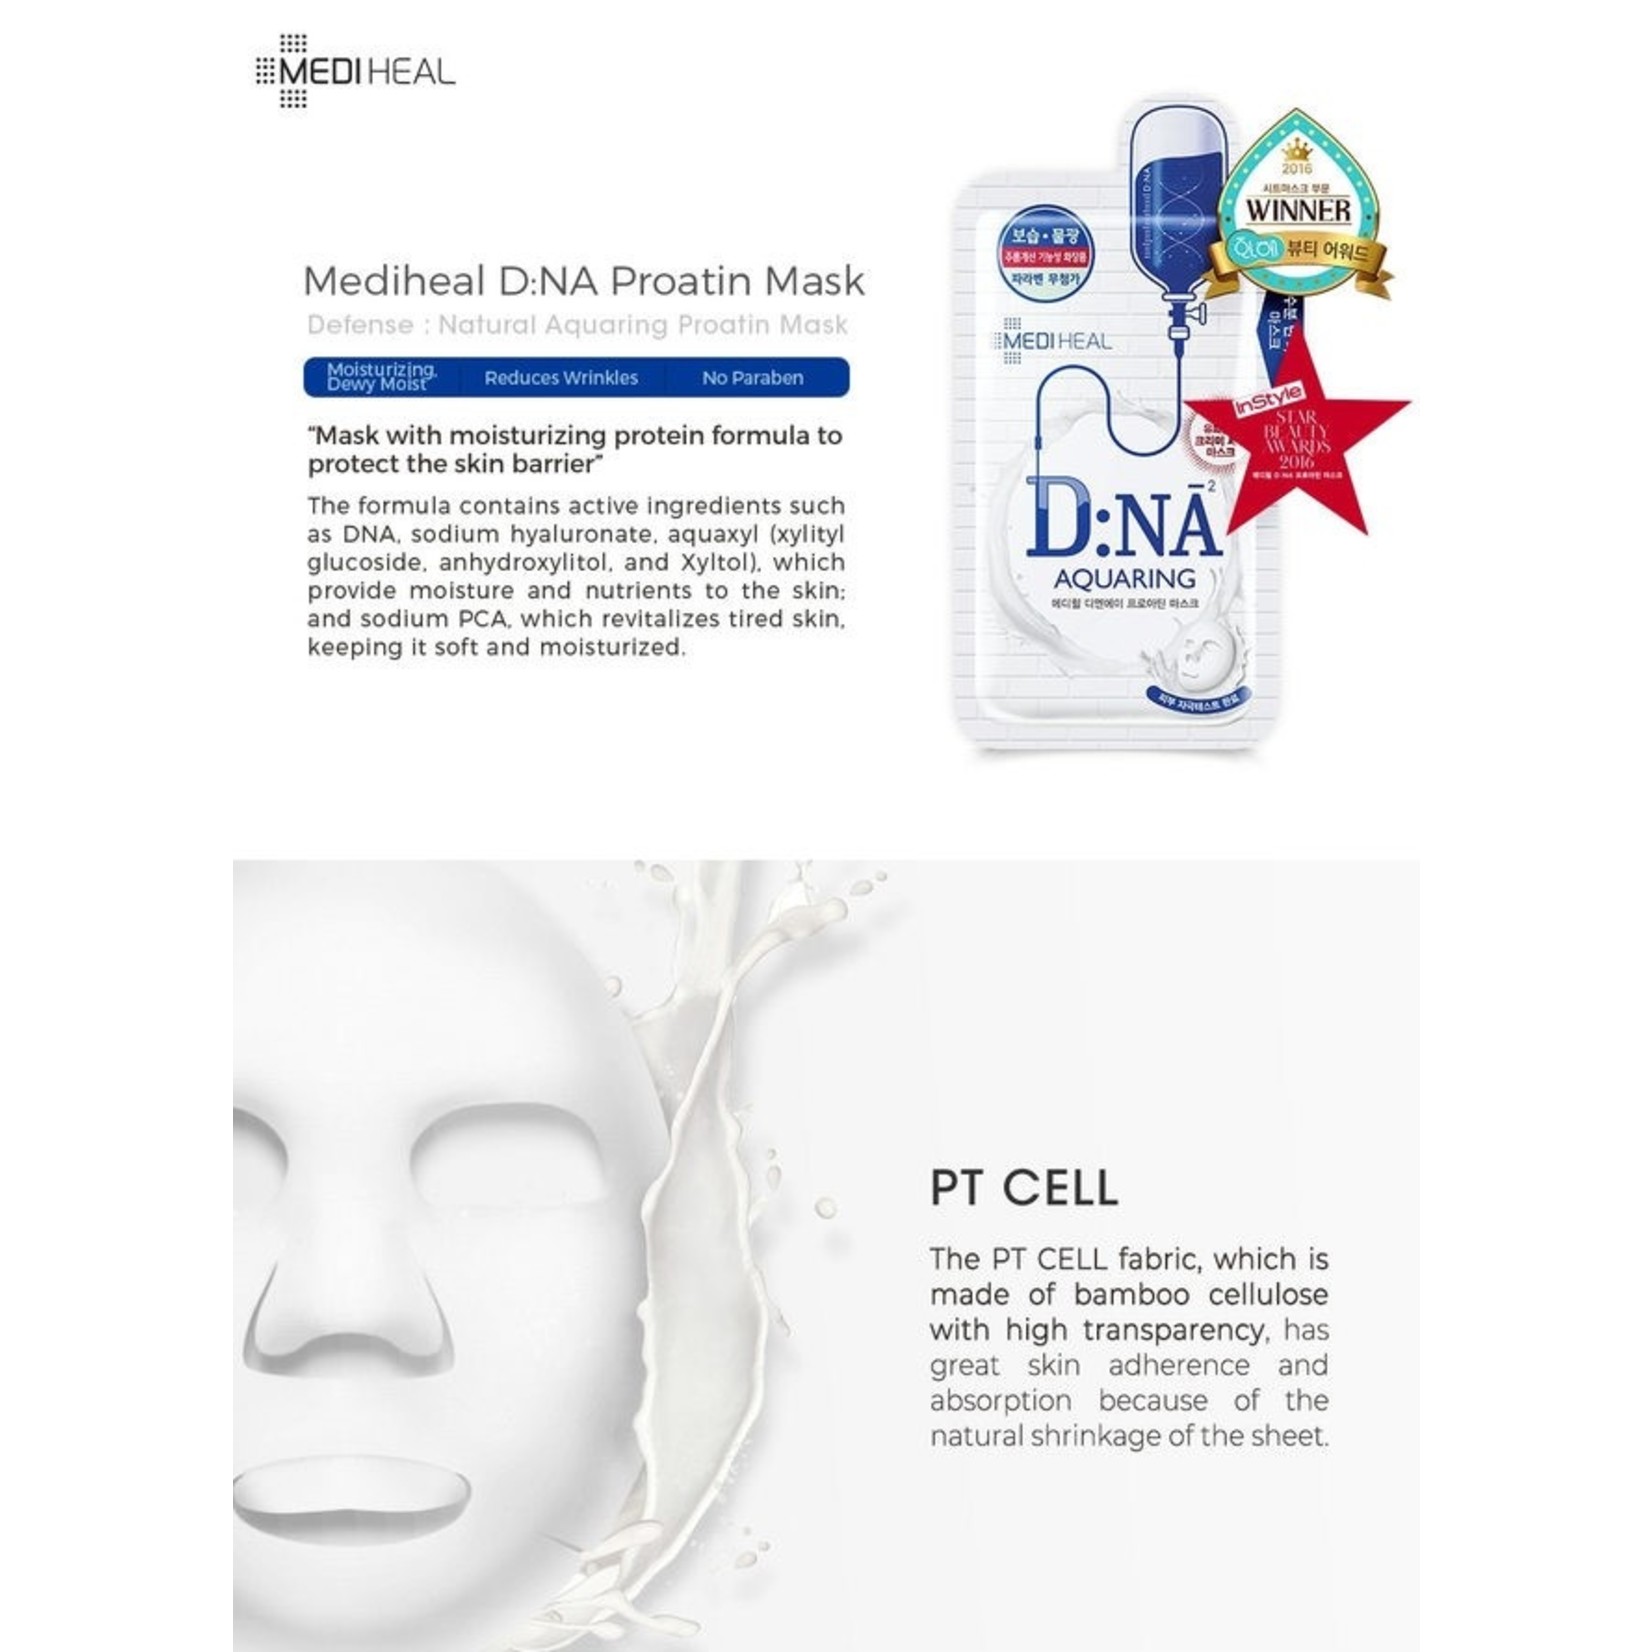 Mediheal Proatin Mask D.NA Aquaring